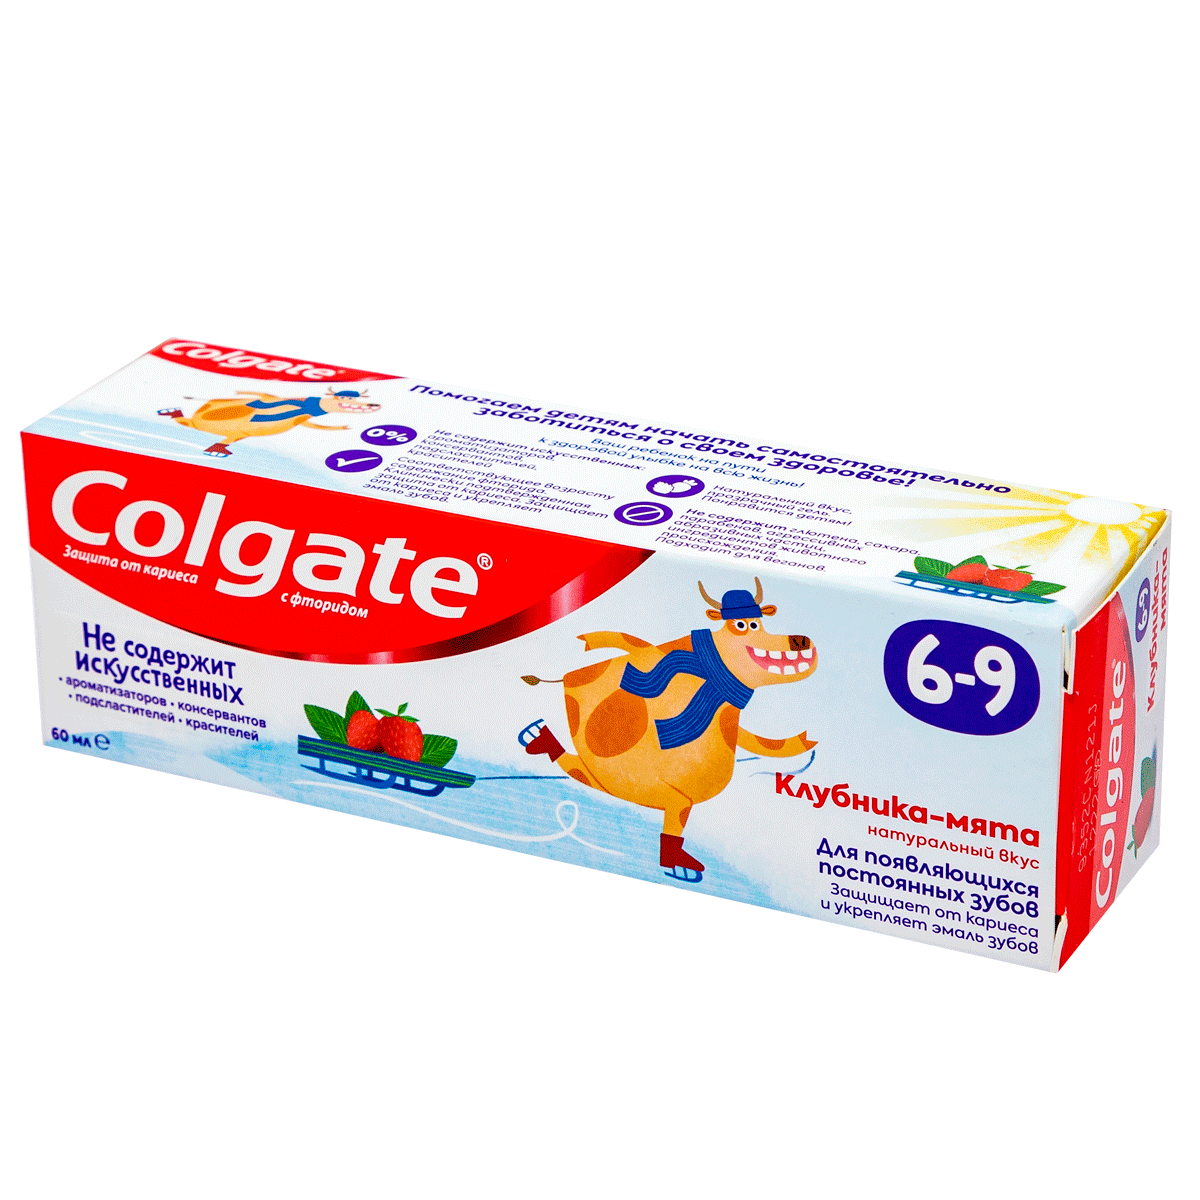 Children's toothpaste Colgate